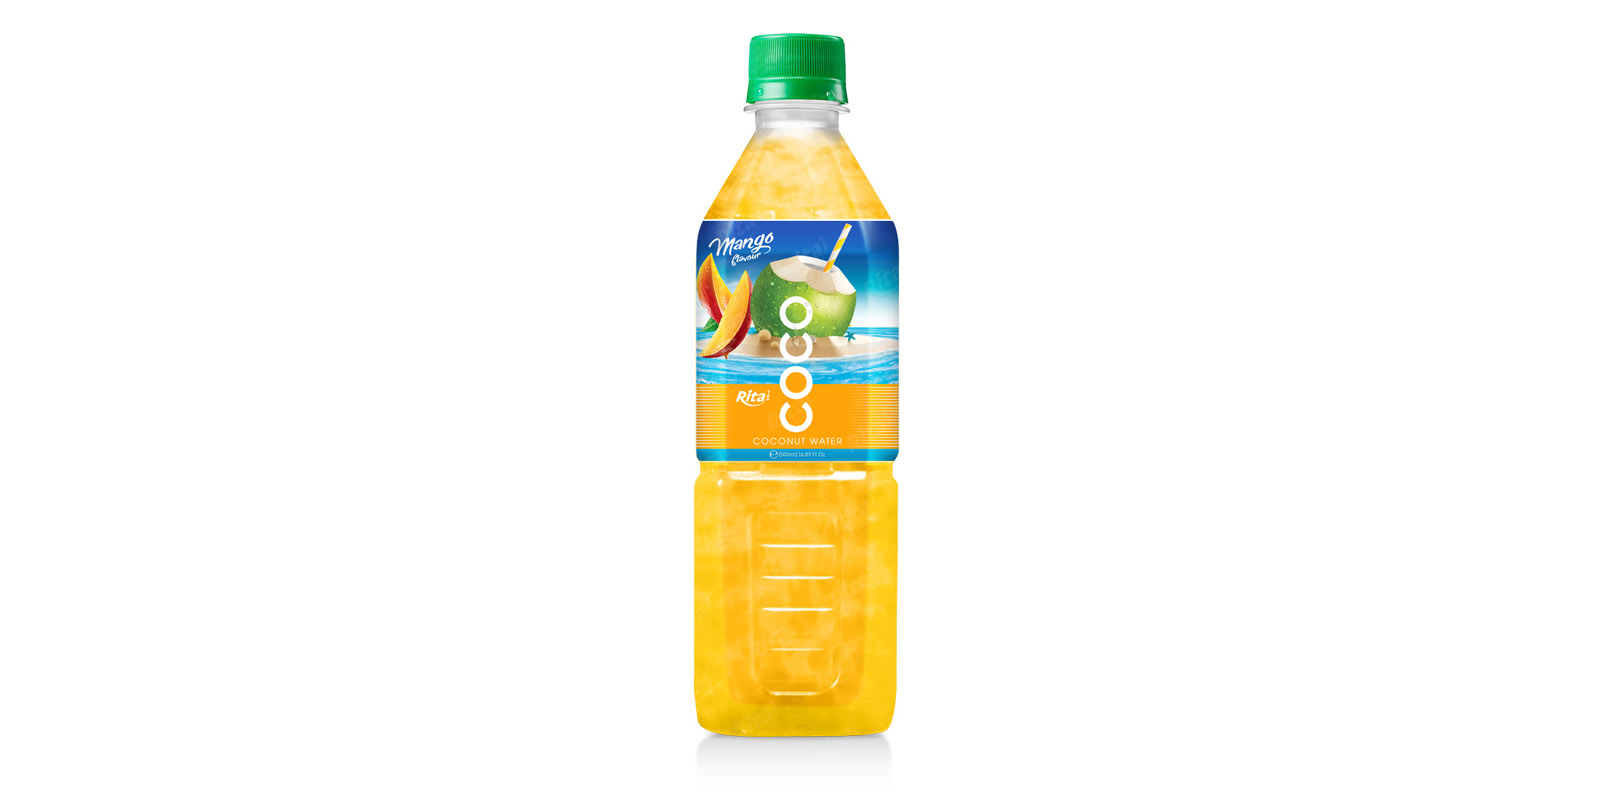 Coconut water with mango flavor  500ml Pet bottle from RITA US